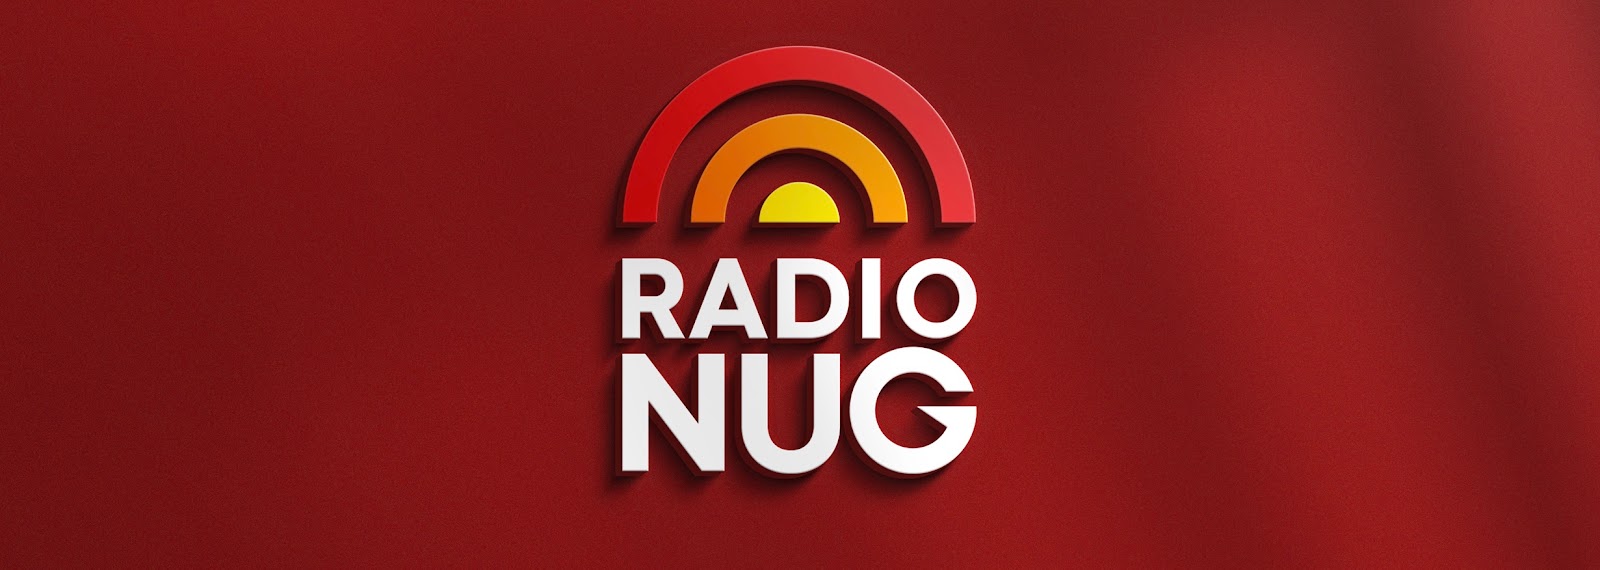 Newsletter by Radio NUG